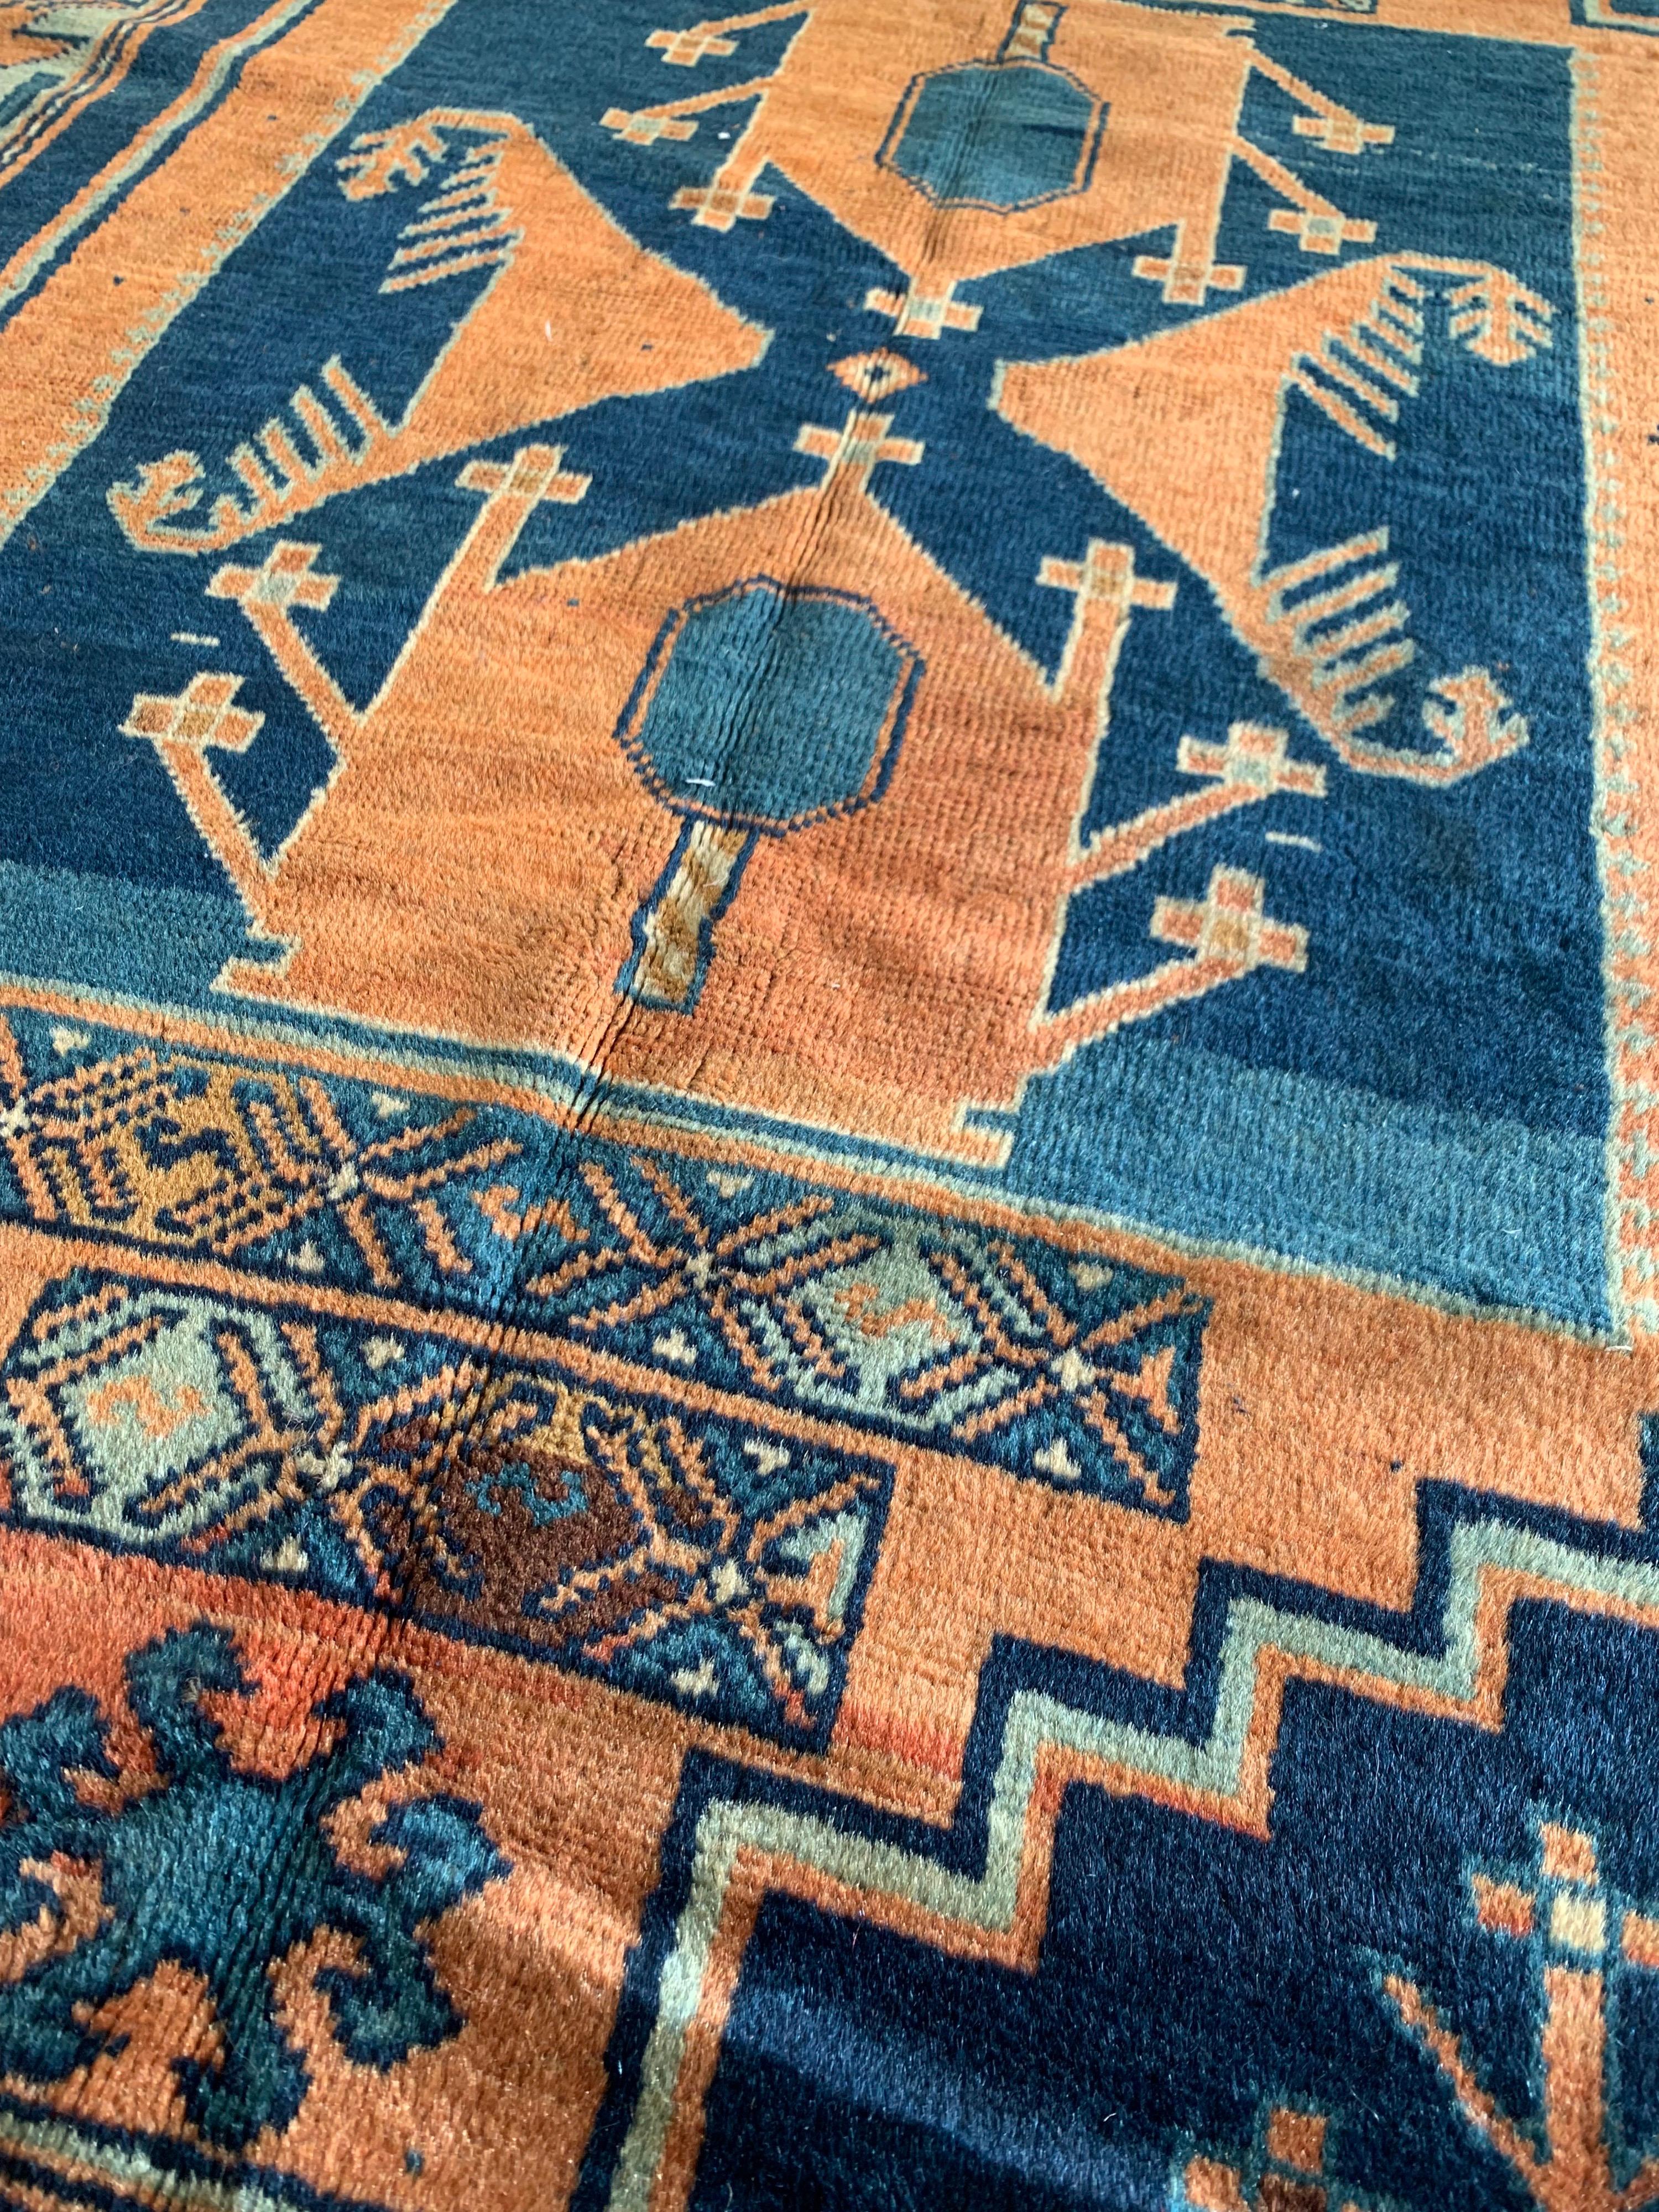 Hand-Woven Antique Caucasian Orange and Blue Kazak Tribal Geometric Area Rug For Sale